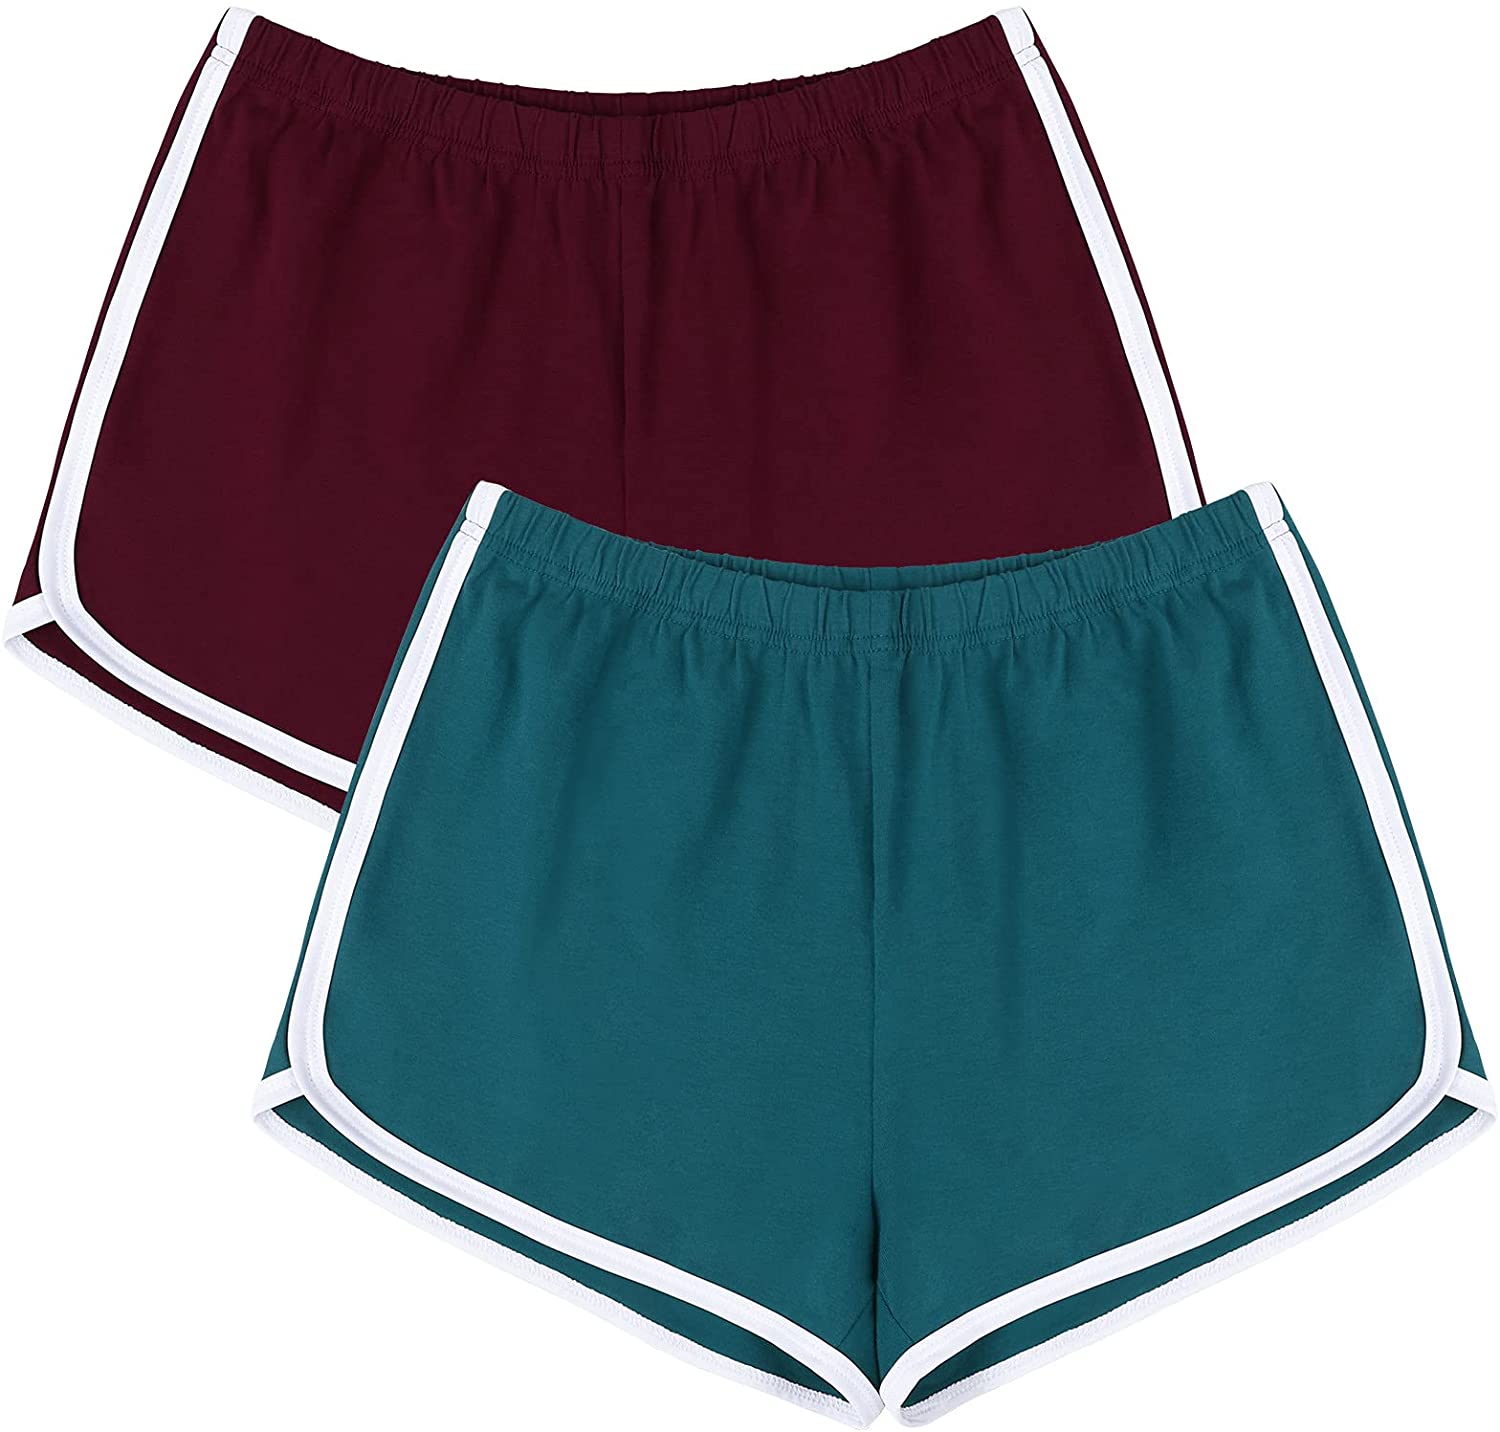 Cotton Sports Shorts Athletic Shorts Yoga Dance Summer Short Pants